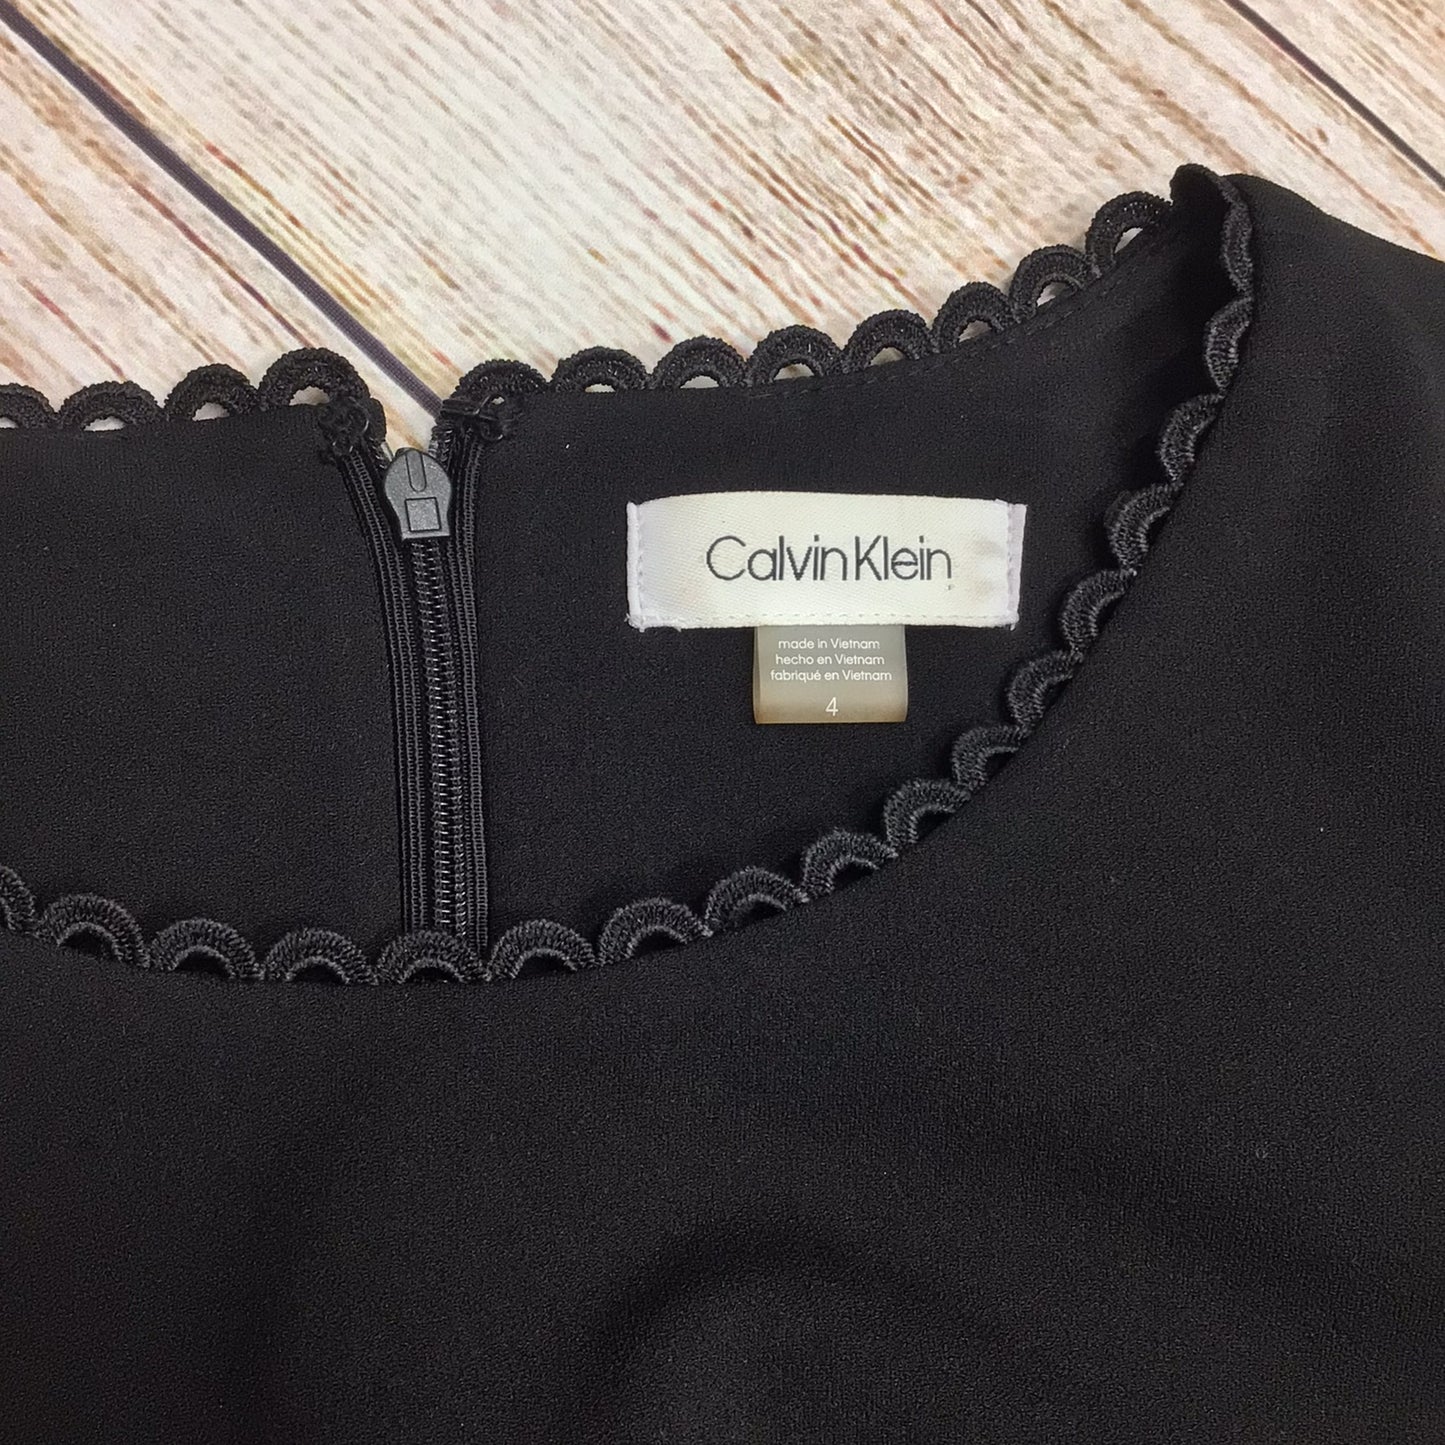 Calvin Klein Black Mini Dress w/Scallop Embroidered Detail Size 8 (4 on label)